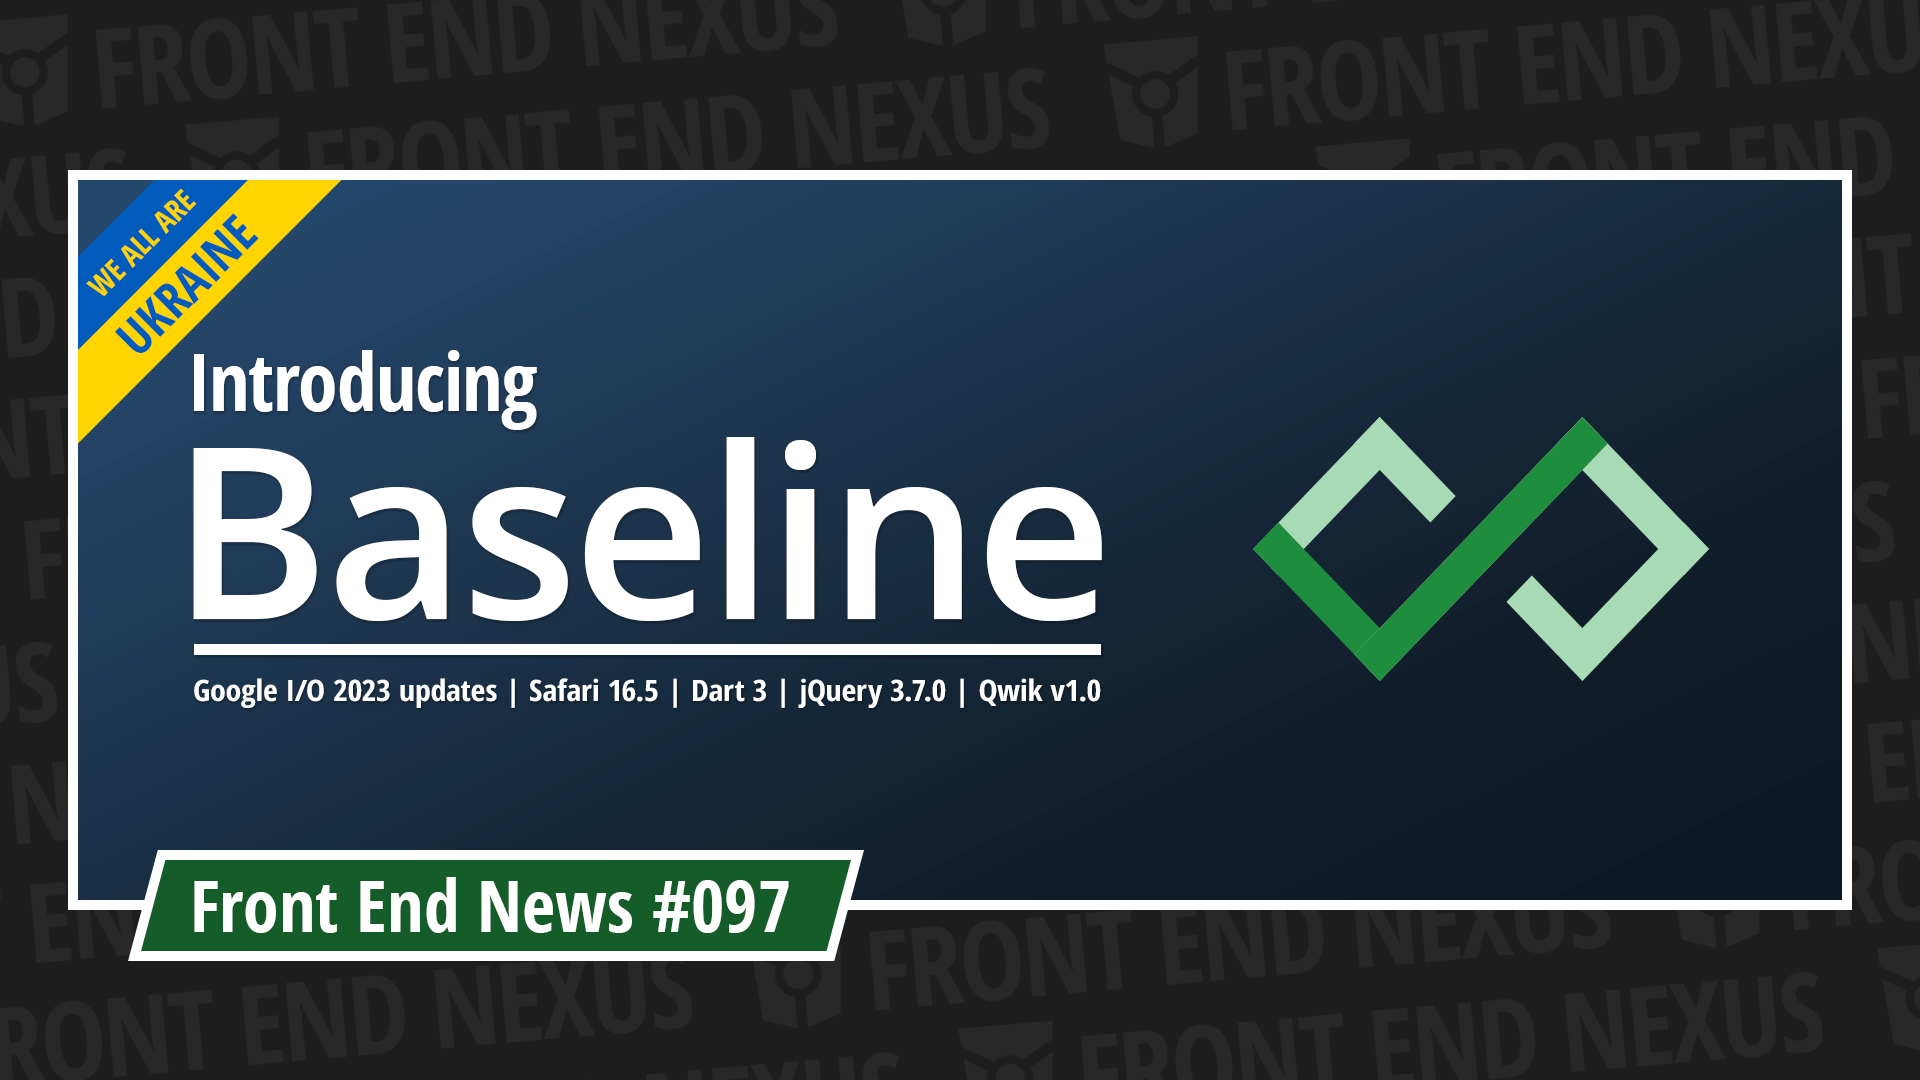 Introducing Baseline, Google I/O 2023 updates, Safari 16.5, Dart 3, jQuery 3.7.0, Qwik v1.0, and more | Front End News #097